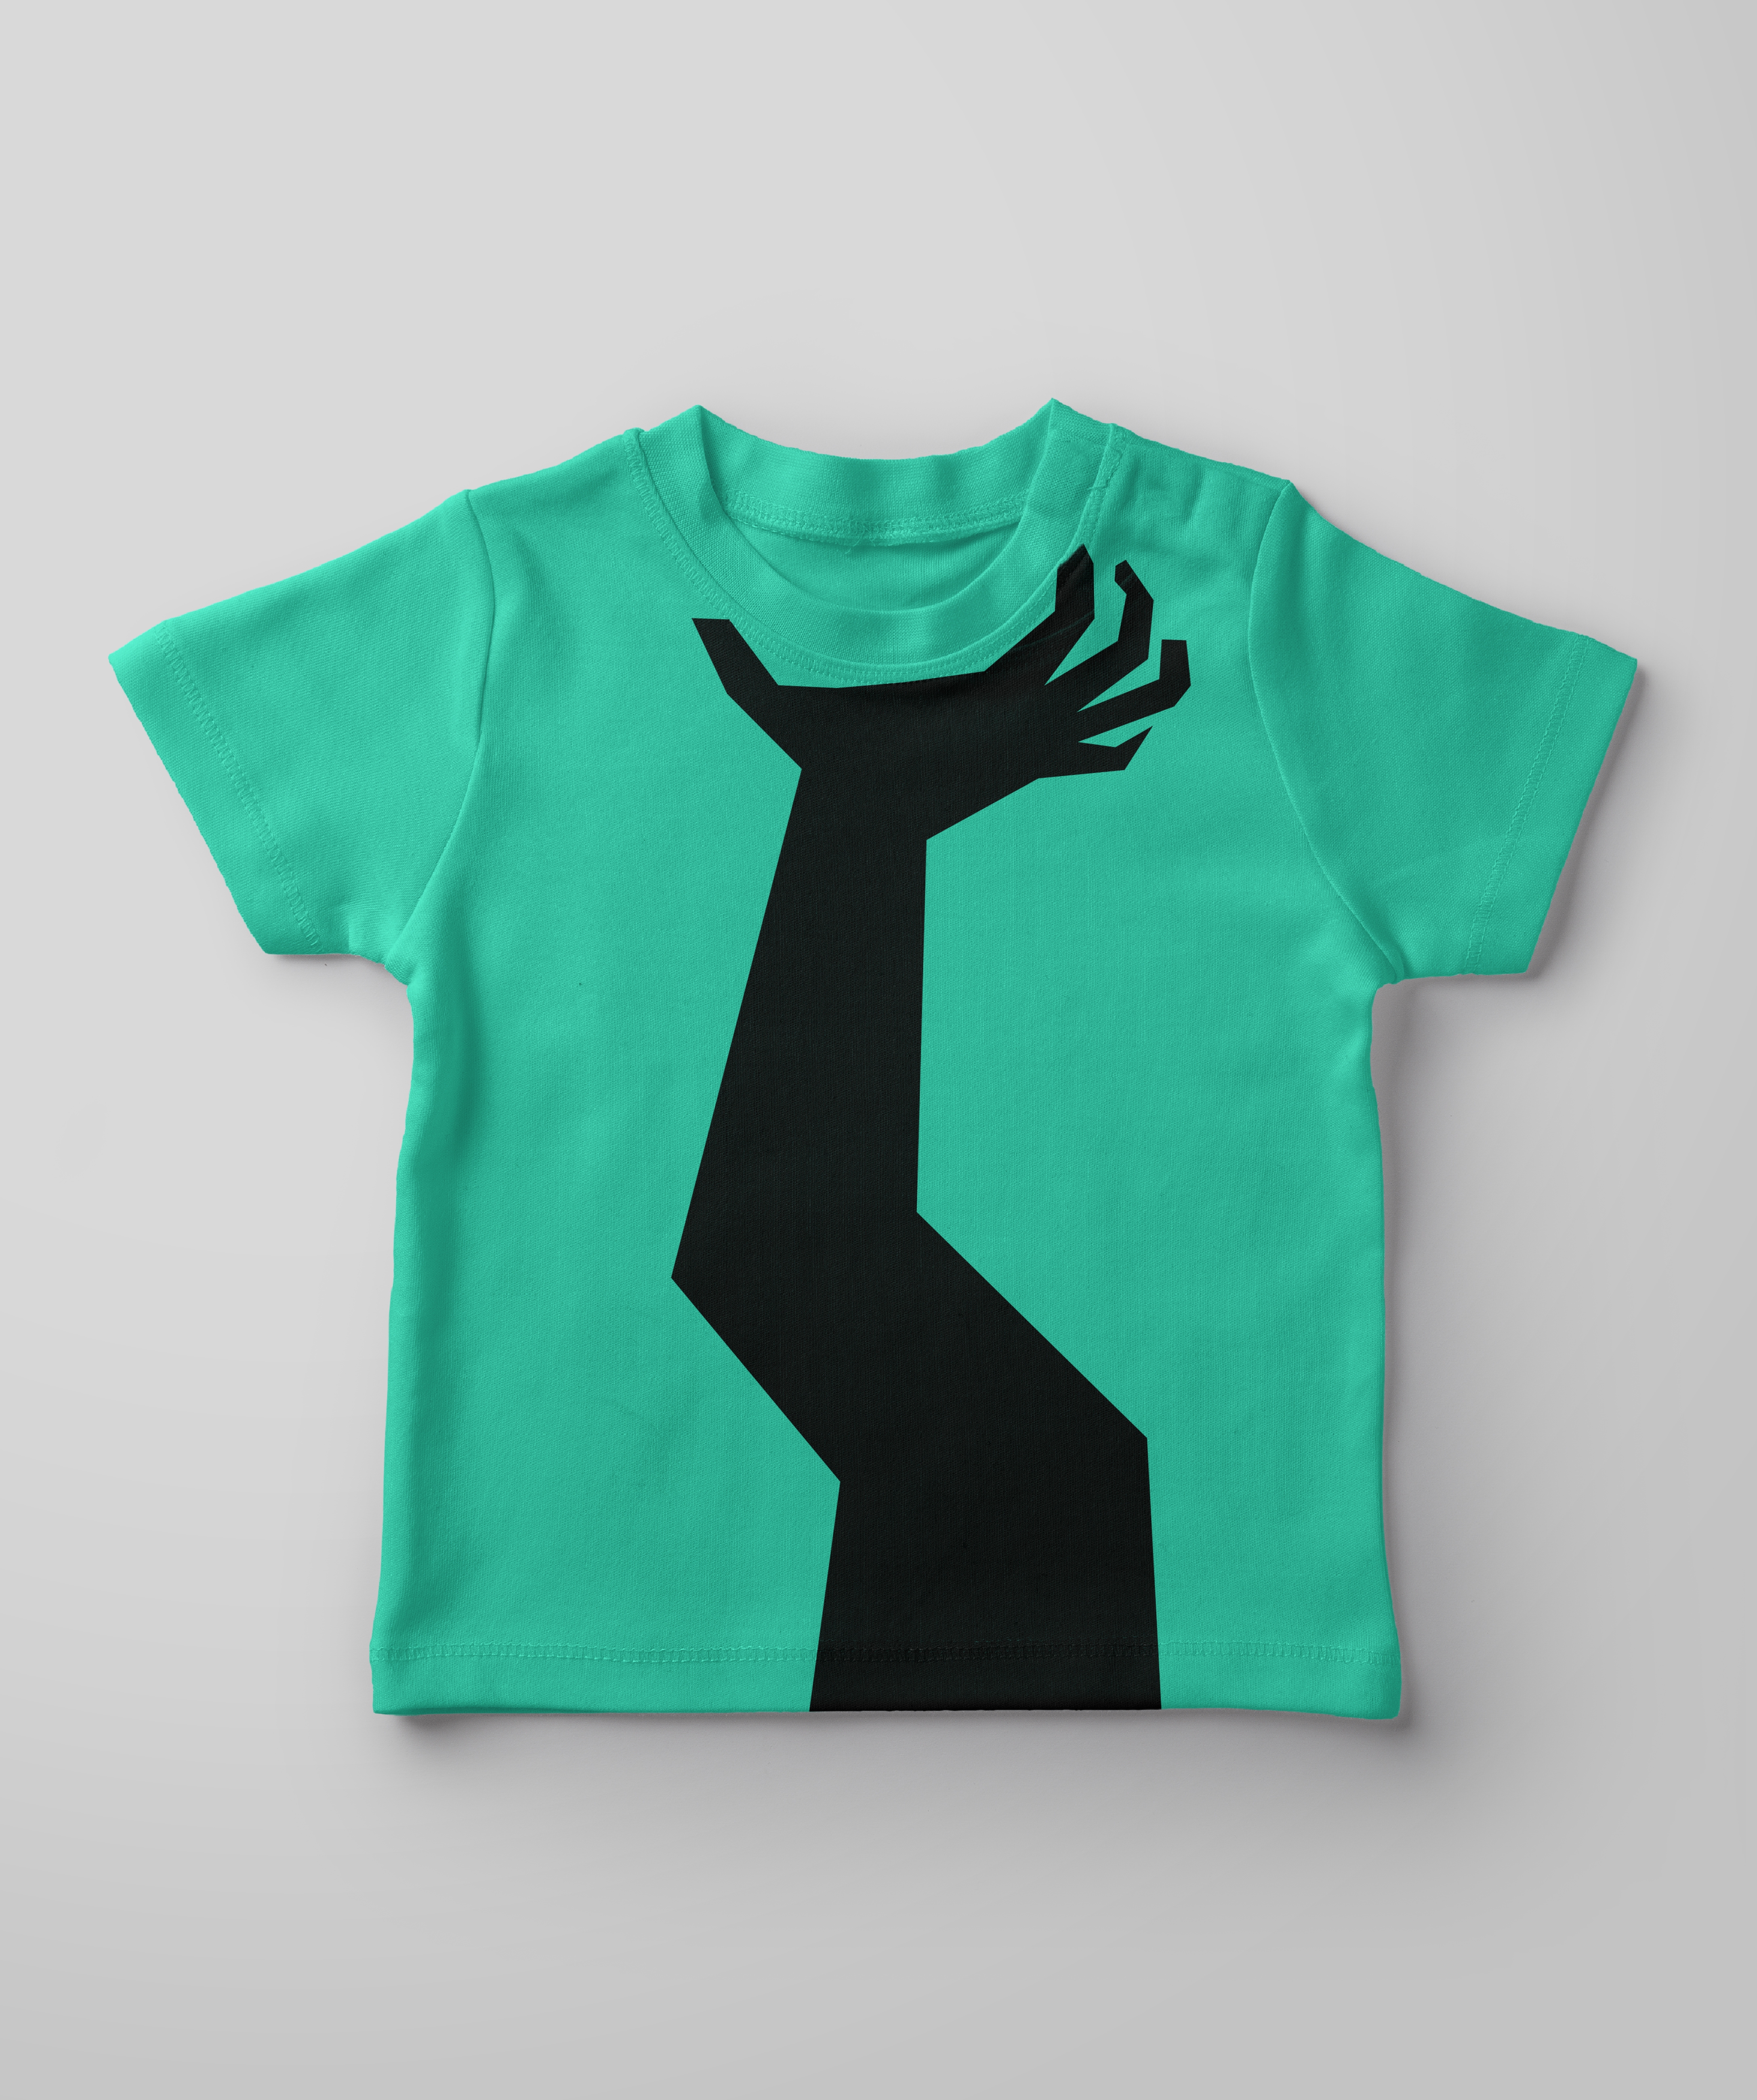 UrGear | UrGear Kids Teal Green Hand Printed Cotton T-Shirt 0